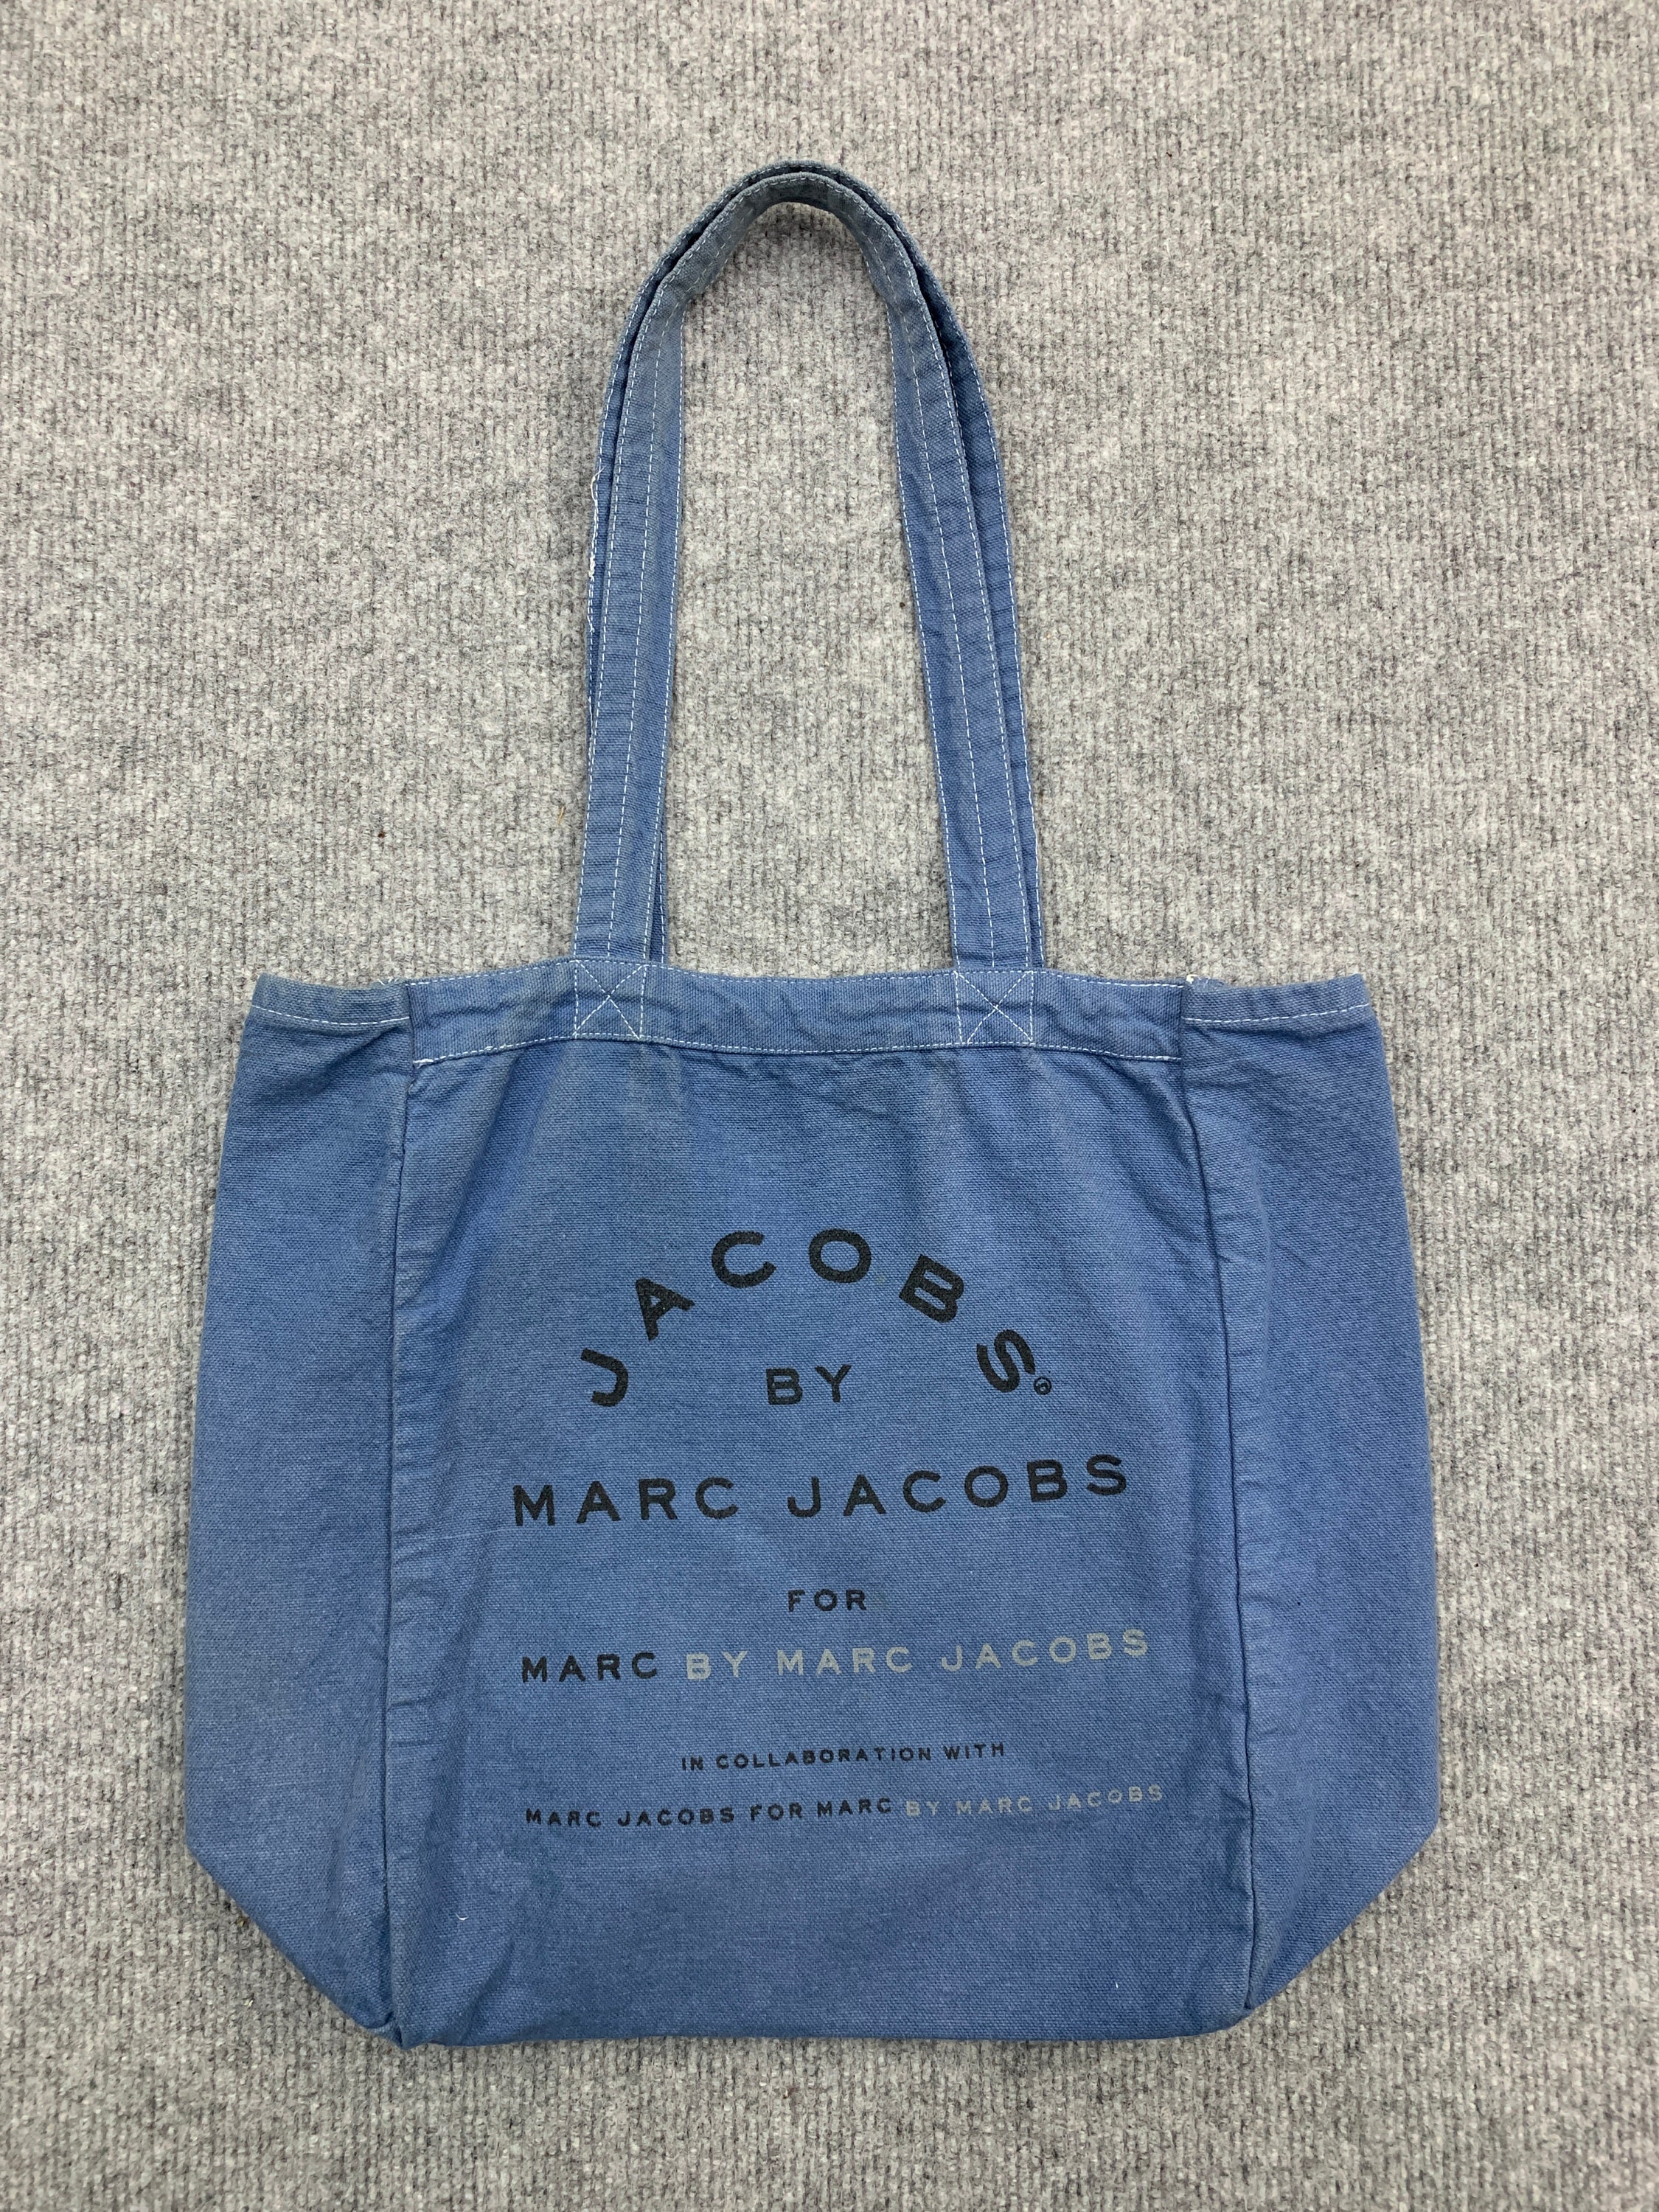 MARC JACOBS MINI TOTE THE DENIM BAG Shoulder Bag Blue Pattern 2way From  Japan